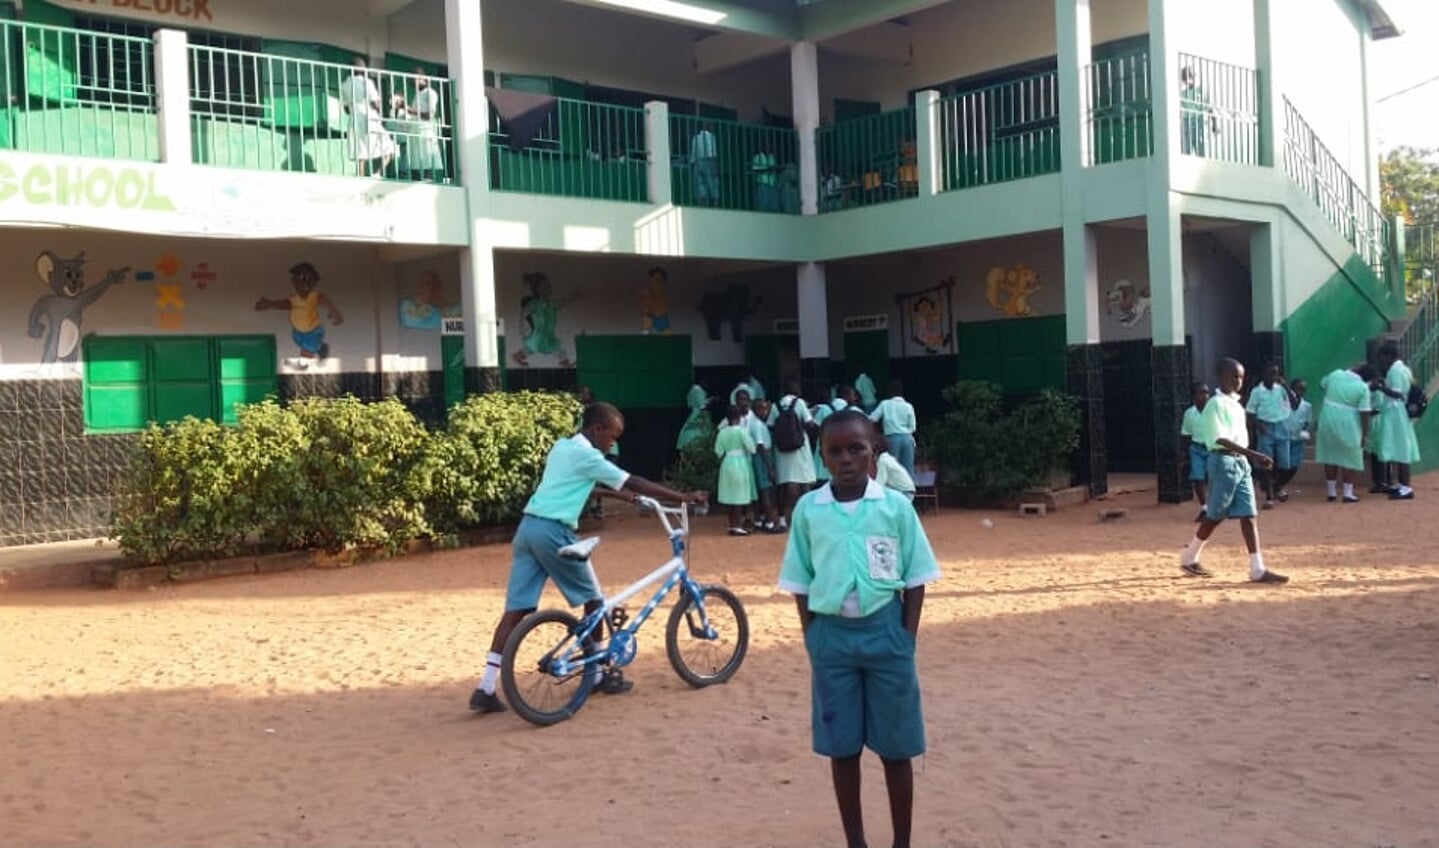 School in Gambia familie Volkers